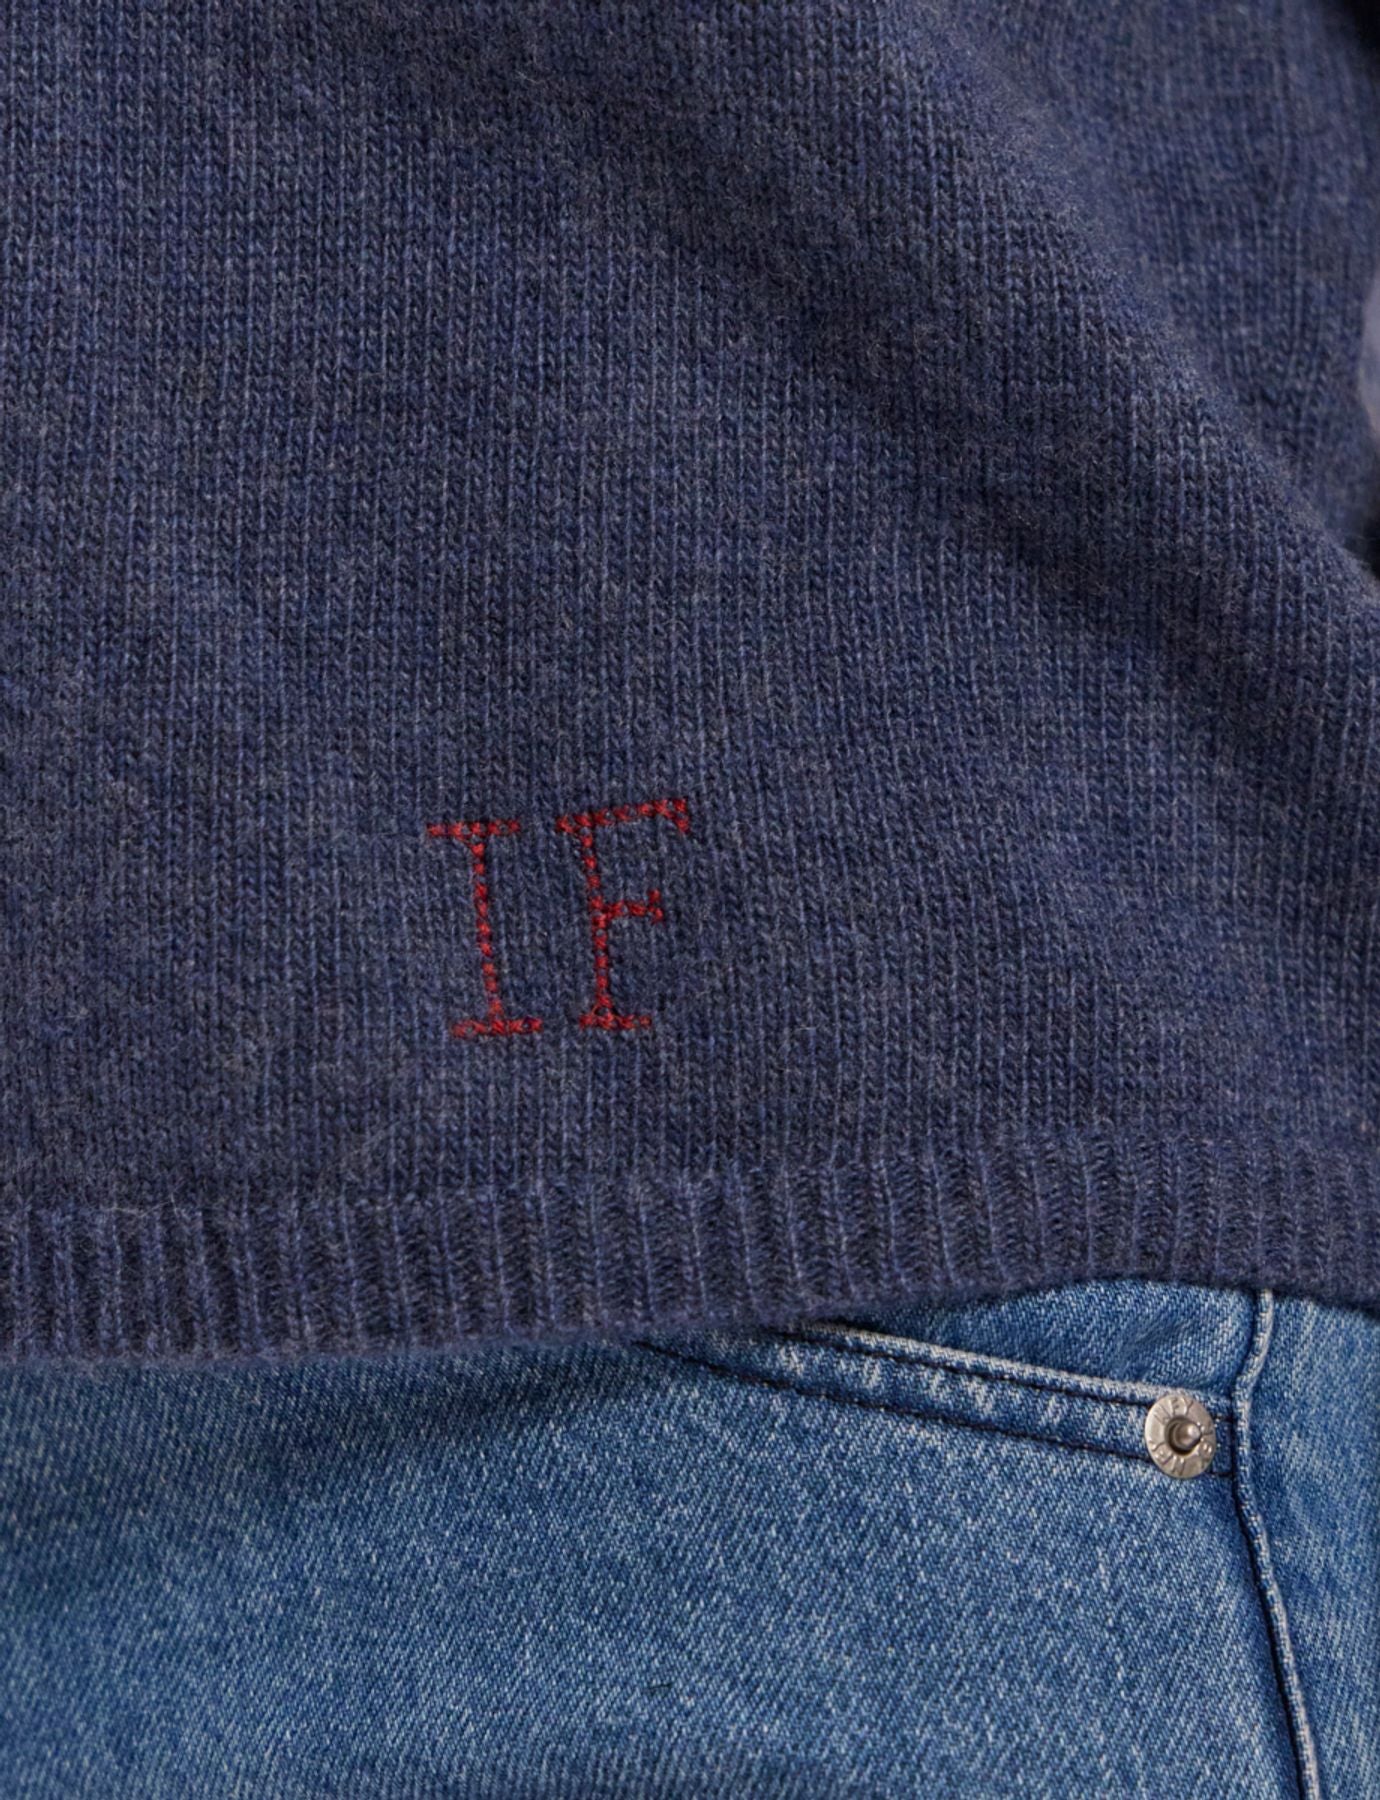 sweater-angelina-laine-and-cashmere-blue-denim